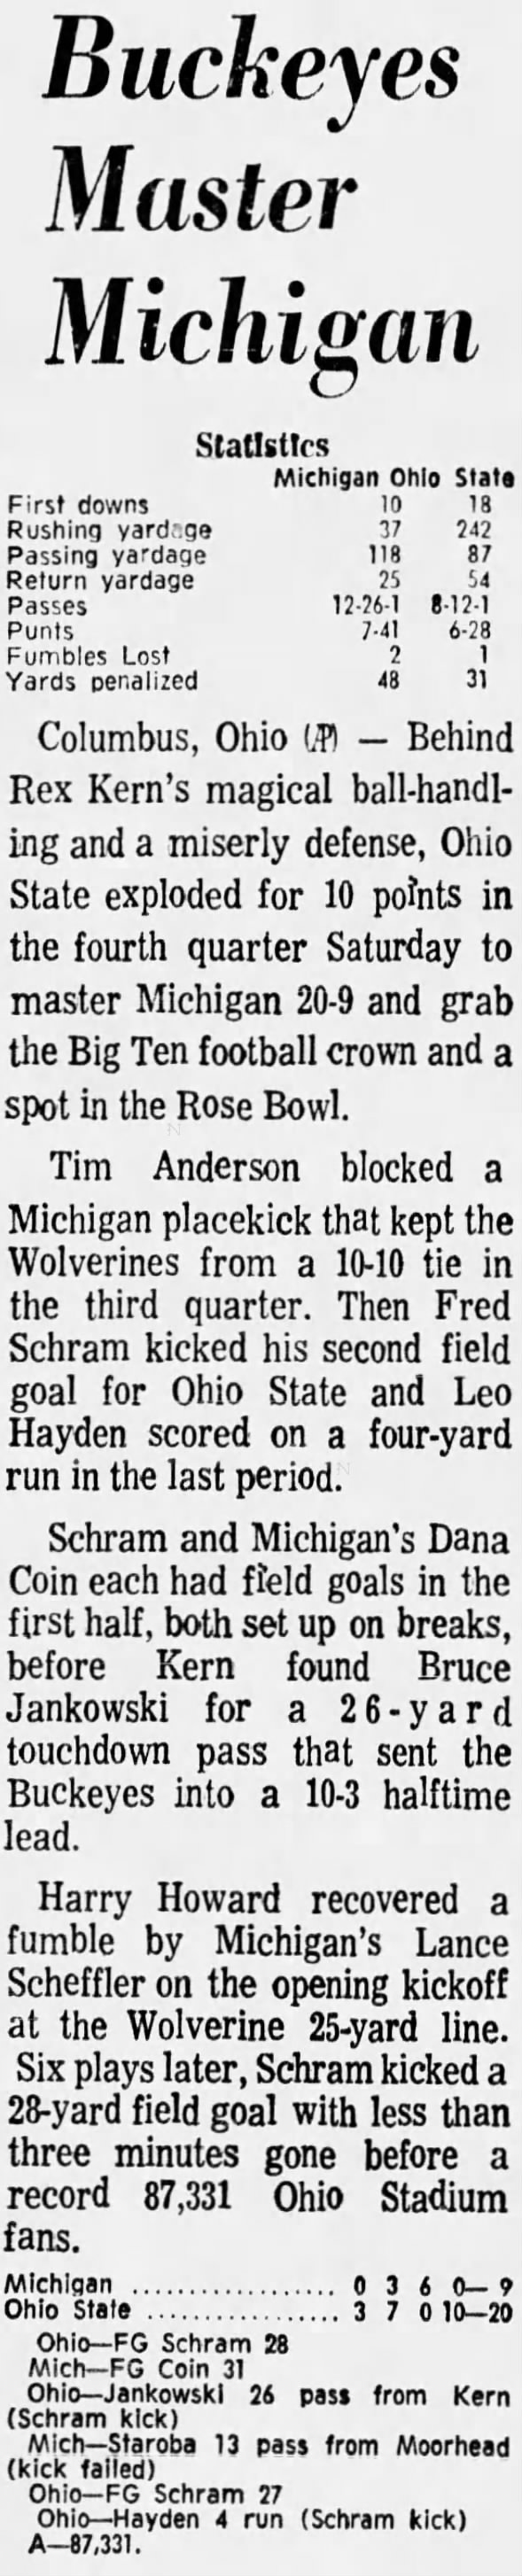 1970 Ohio State-Michigan football